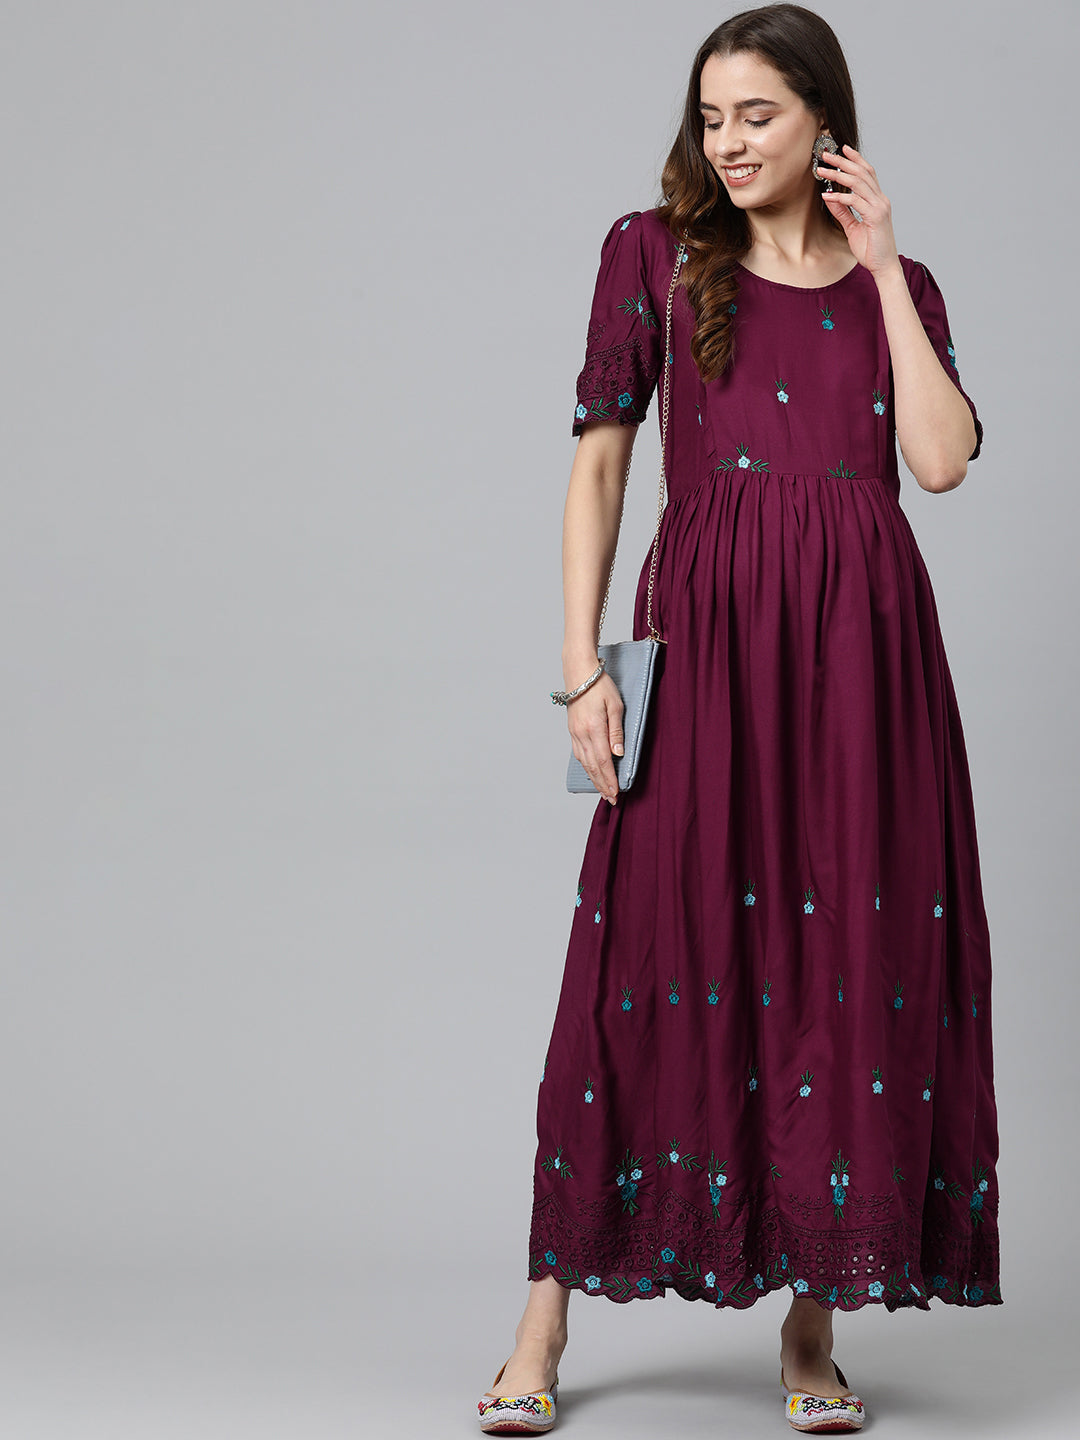 Burgundy floral embroidered fit & flare dress